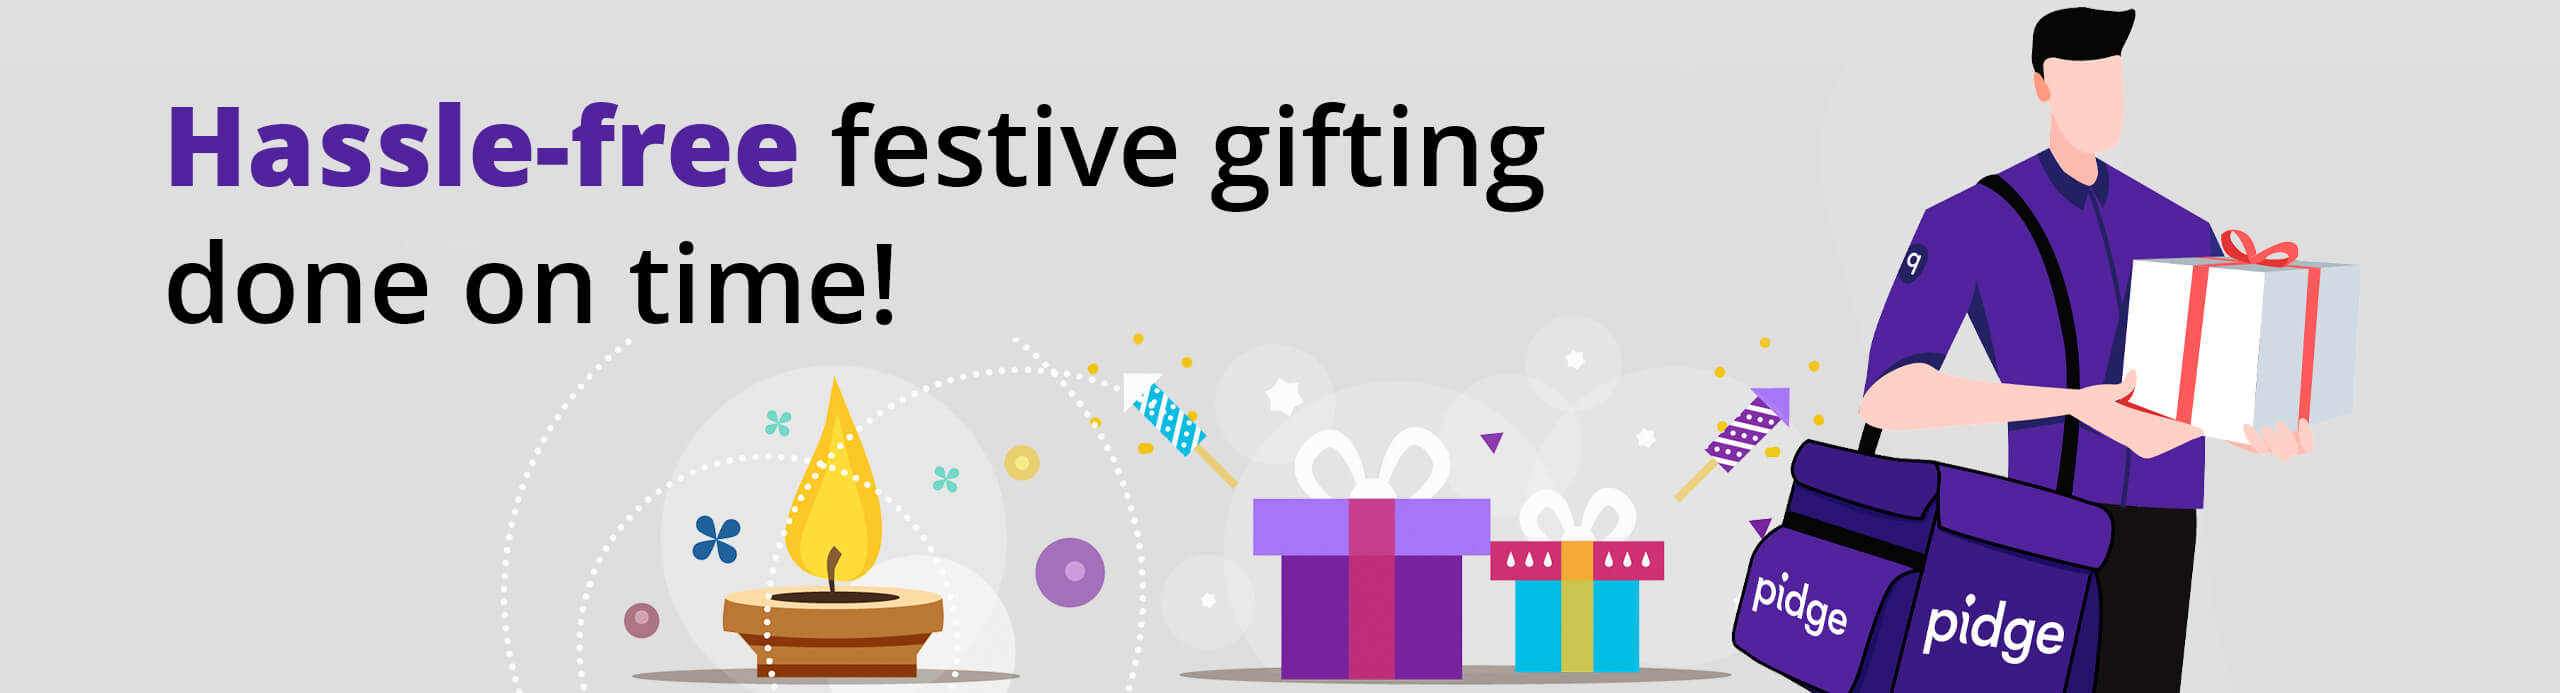 Festive gifting